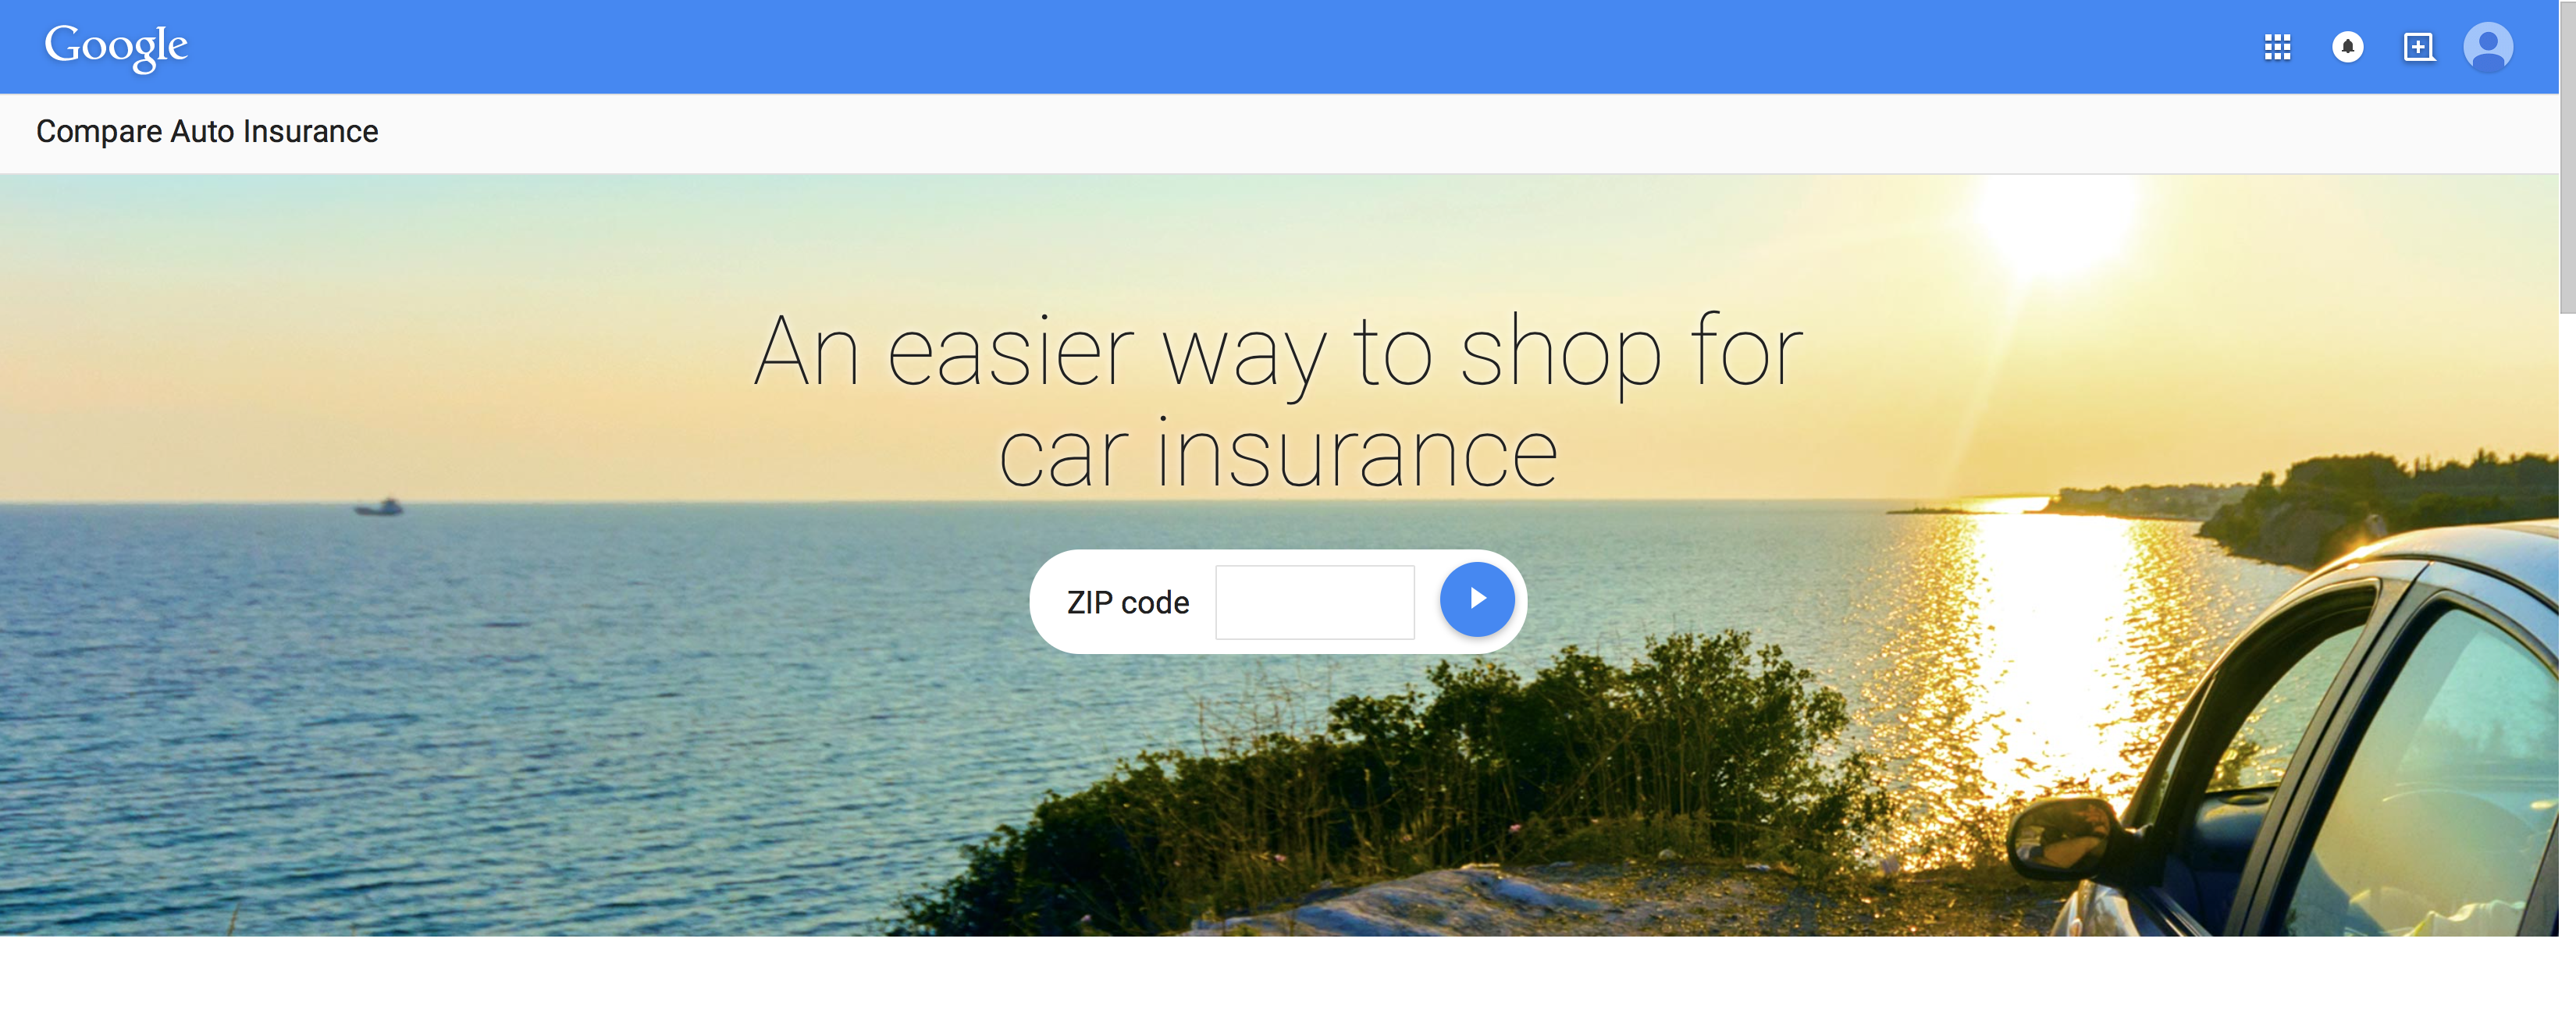 Google Poised to Enter U.S. Auto Insurance Market: Report